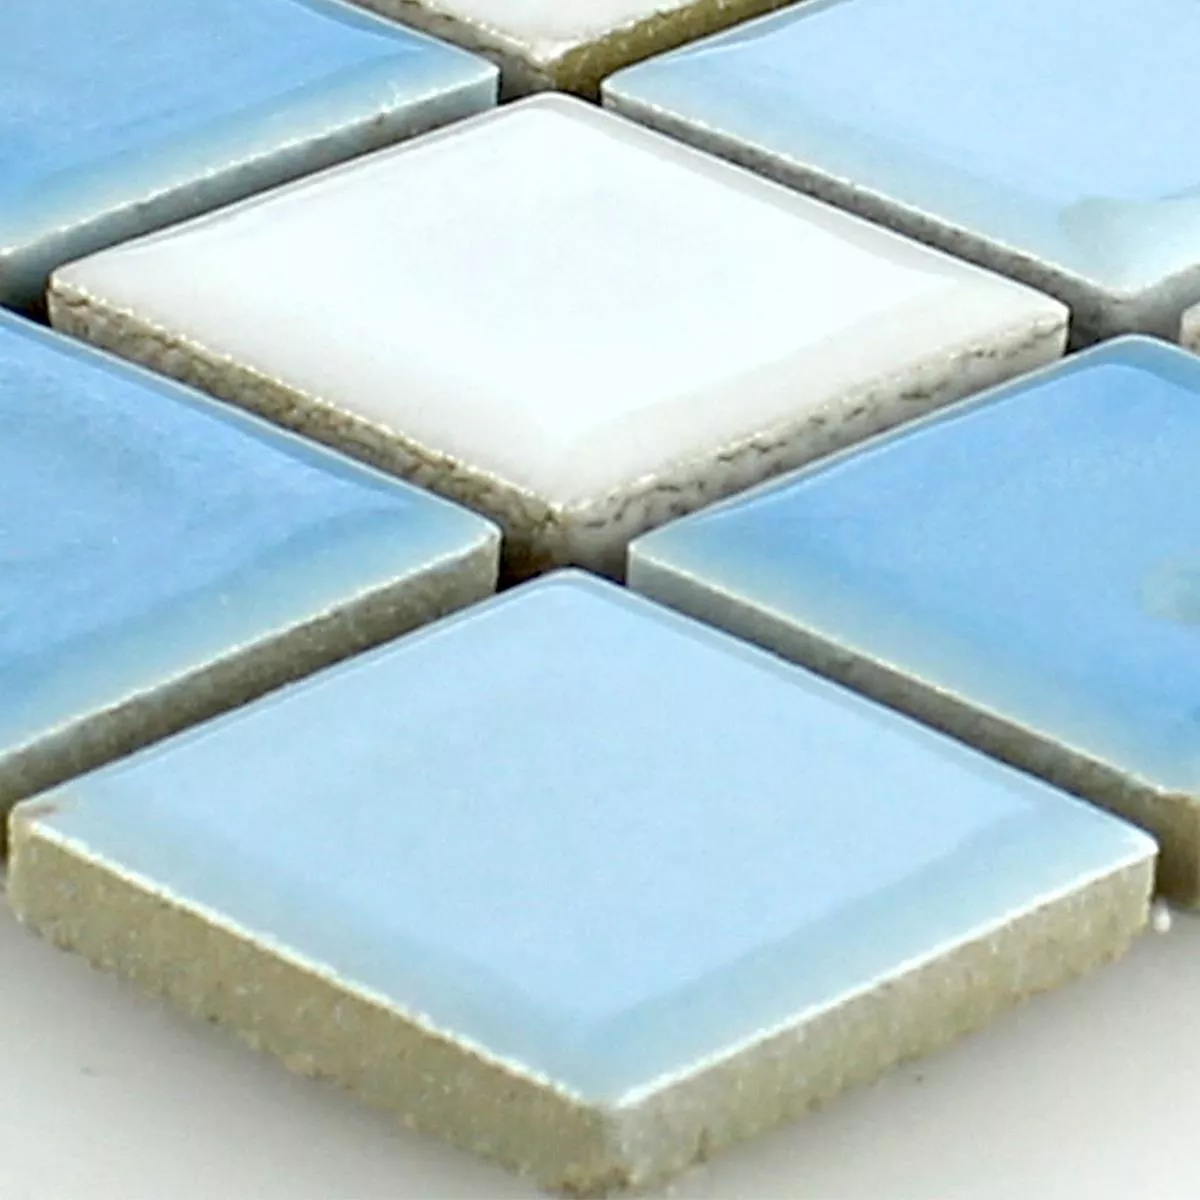 Sample Mosaic Tiles Ceramic Blue White 